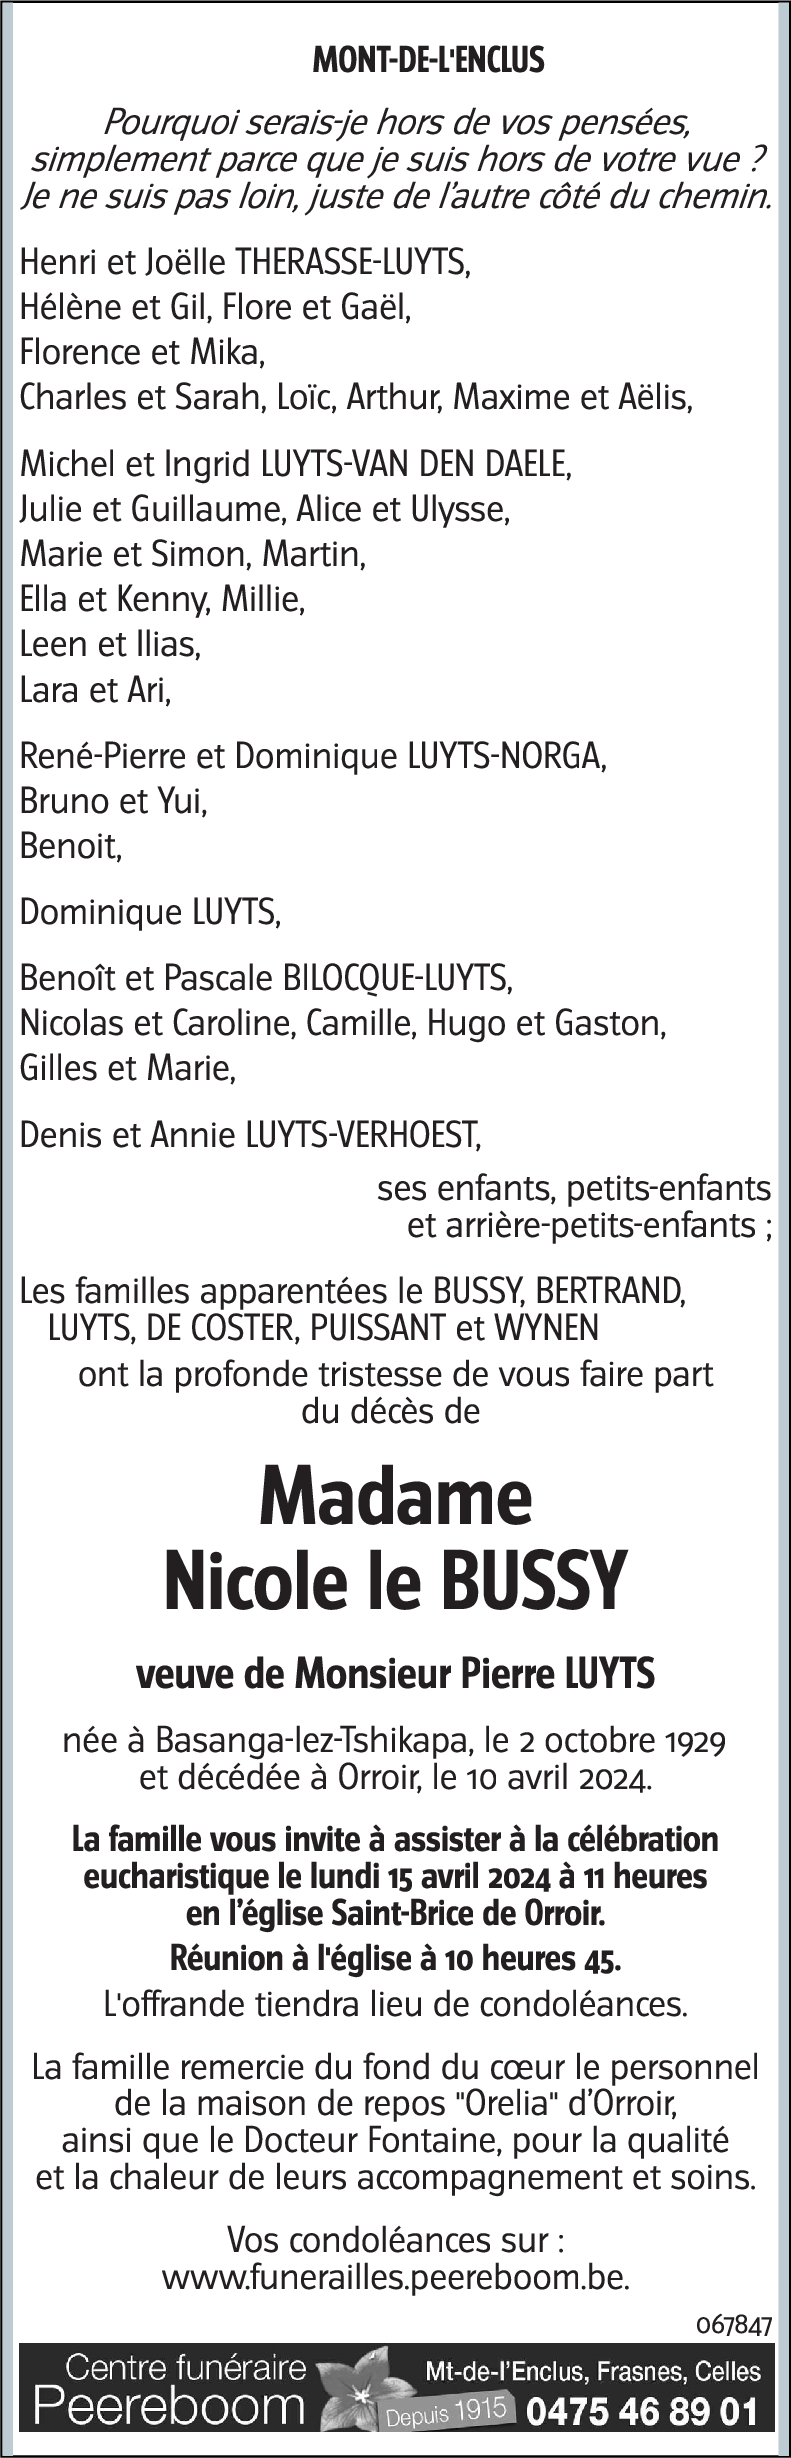 Nicole le BUSSY